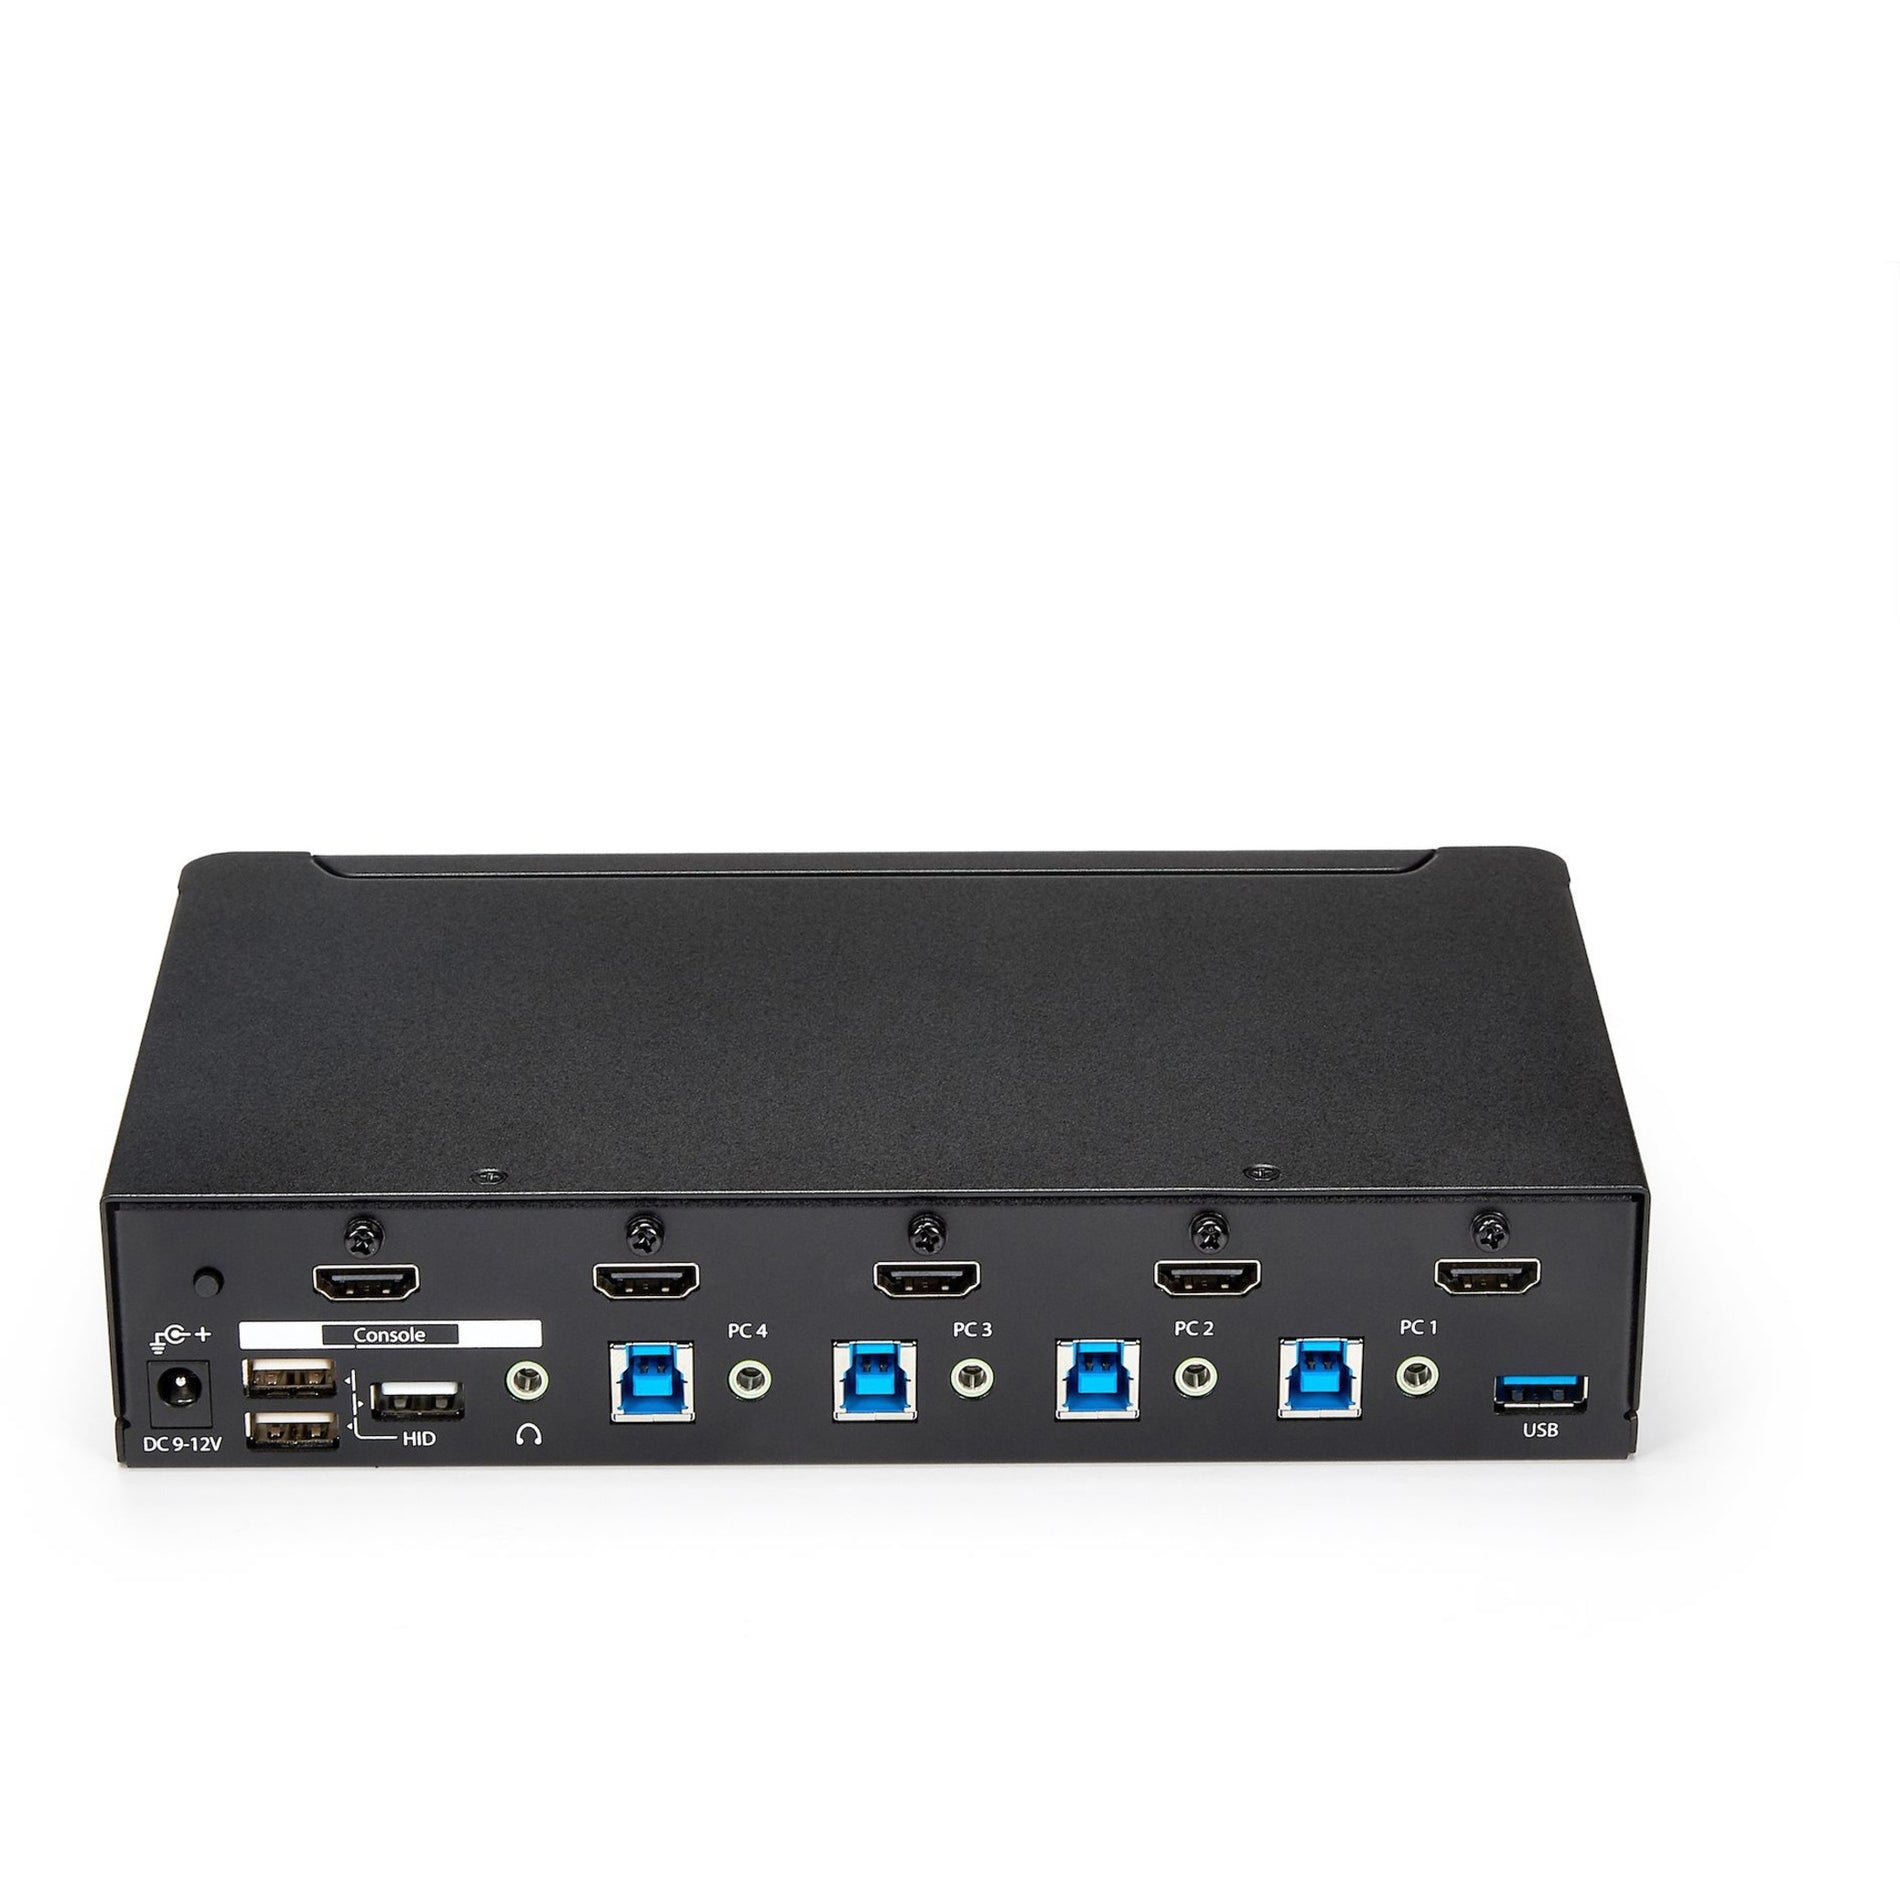 StarTech.com SV431HDU3A2 4-Port HDMI KVM Switch - Built-in USB 3.0 Hub 1080p